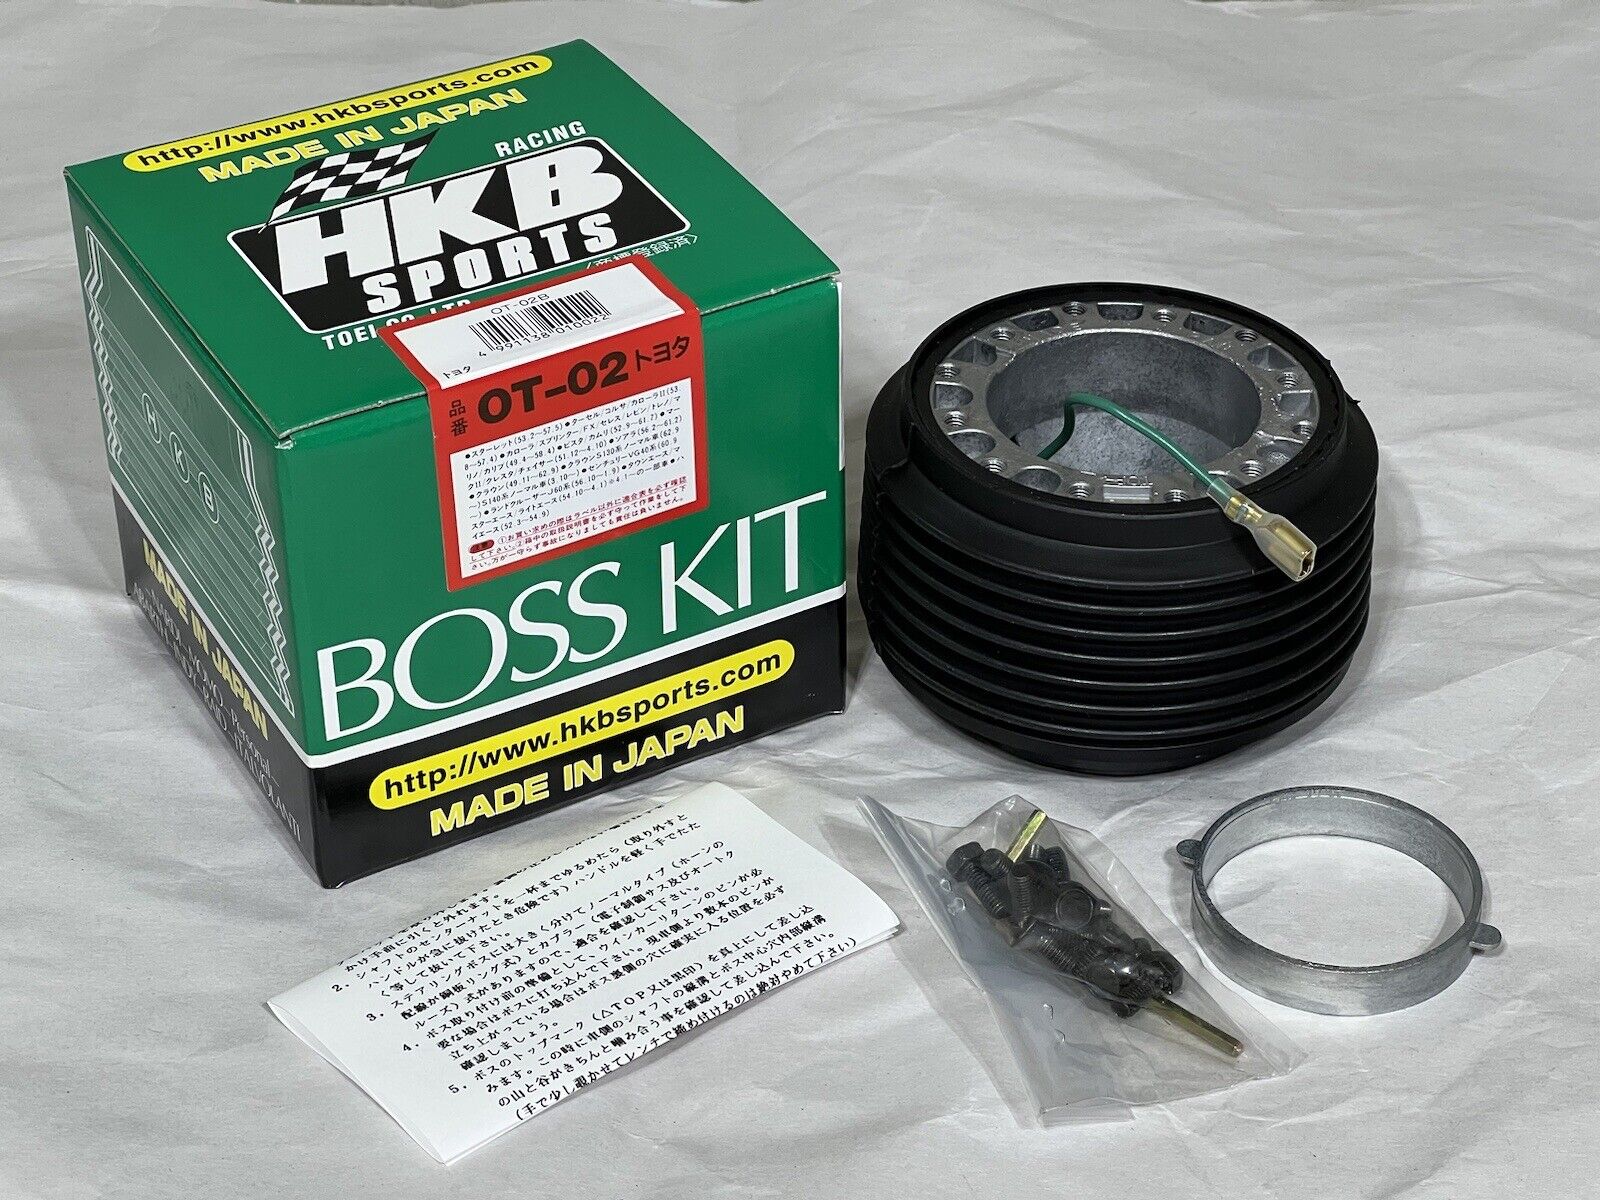 HKB SPORTS Steering Wheel Adapter Kit Boss Kit 1978-1982 Toyota Starlet KP60